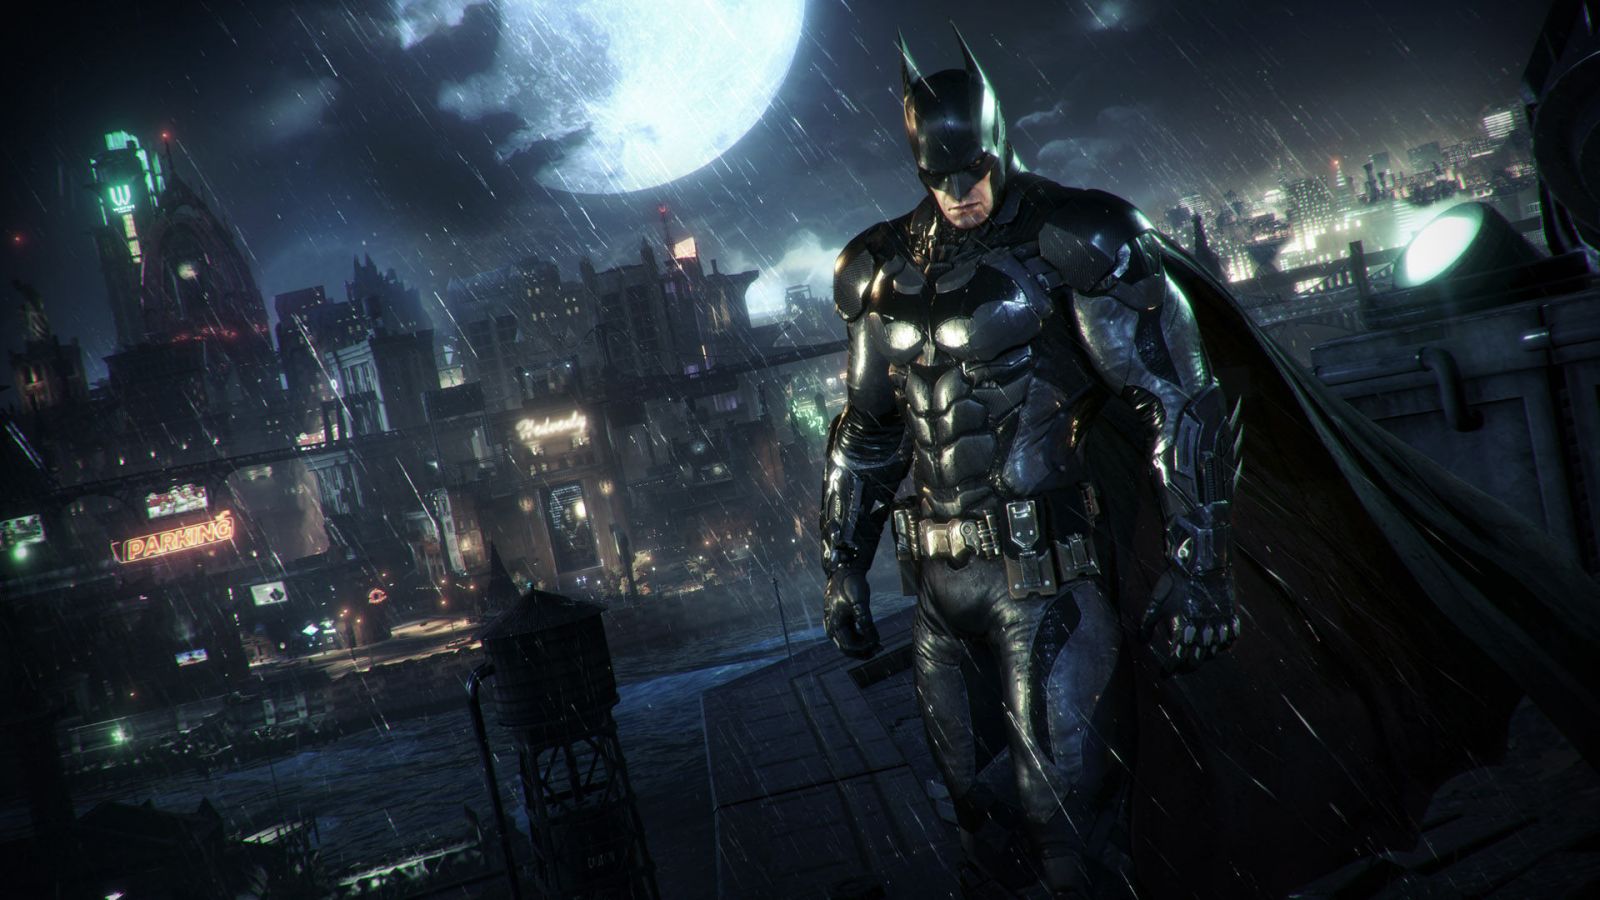 Batman Arkham Knight 1080p Screenshots Released Shows Batmobile